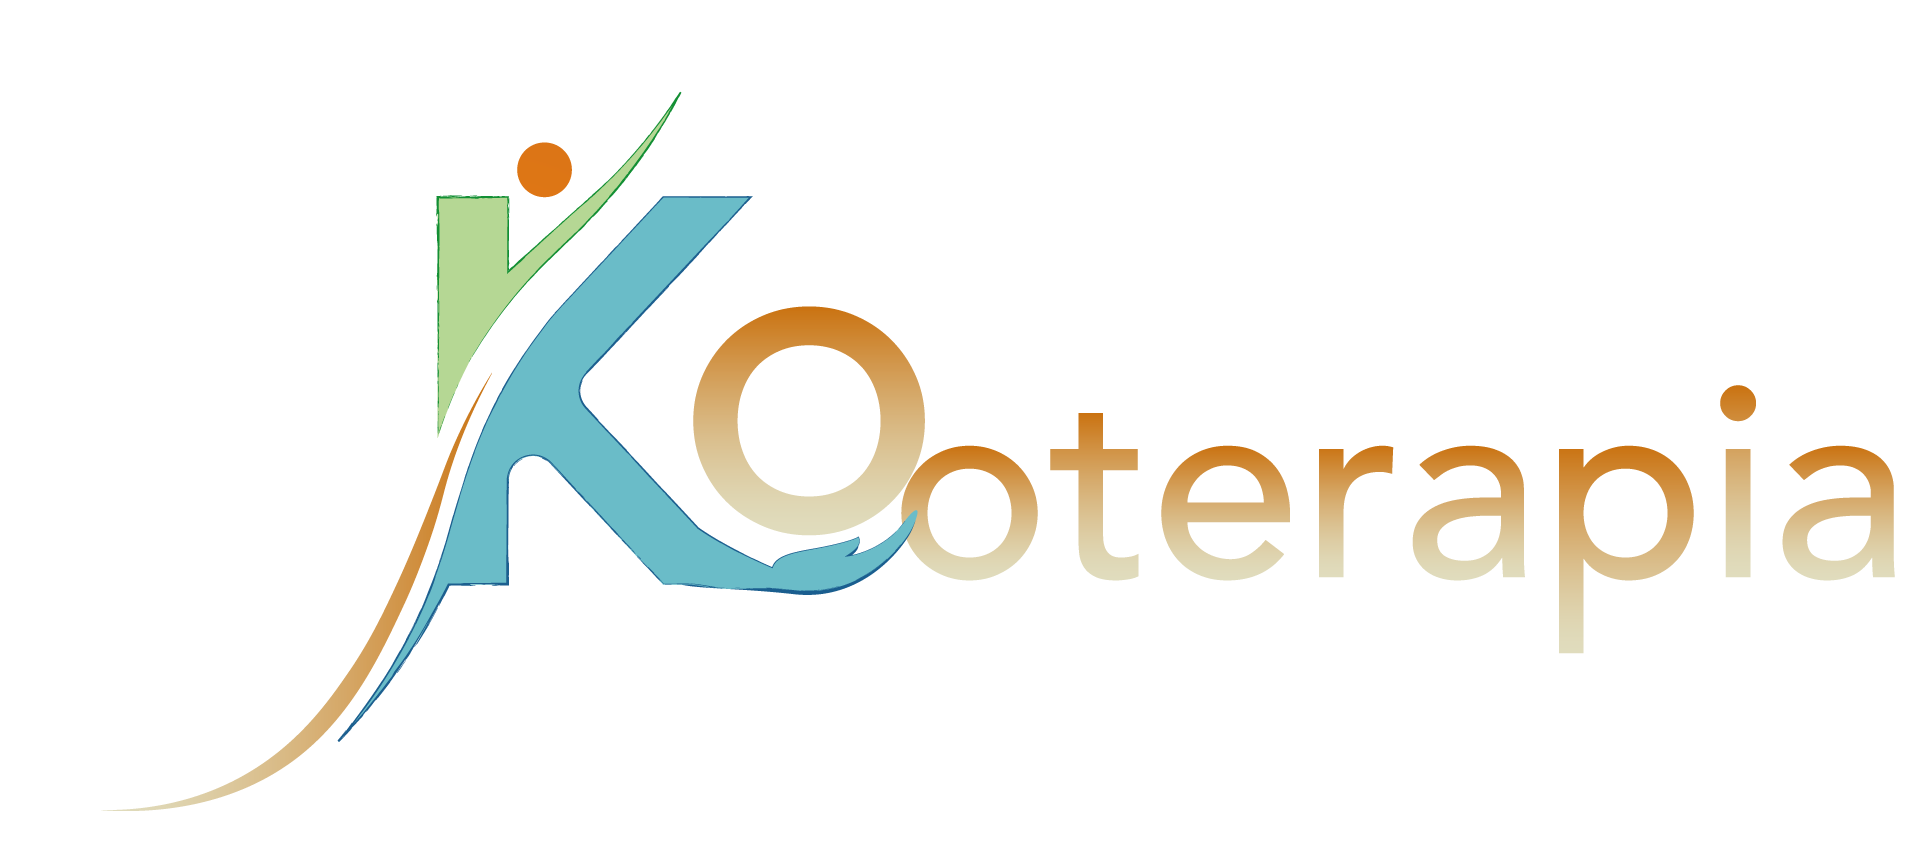 logo de kooterapia